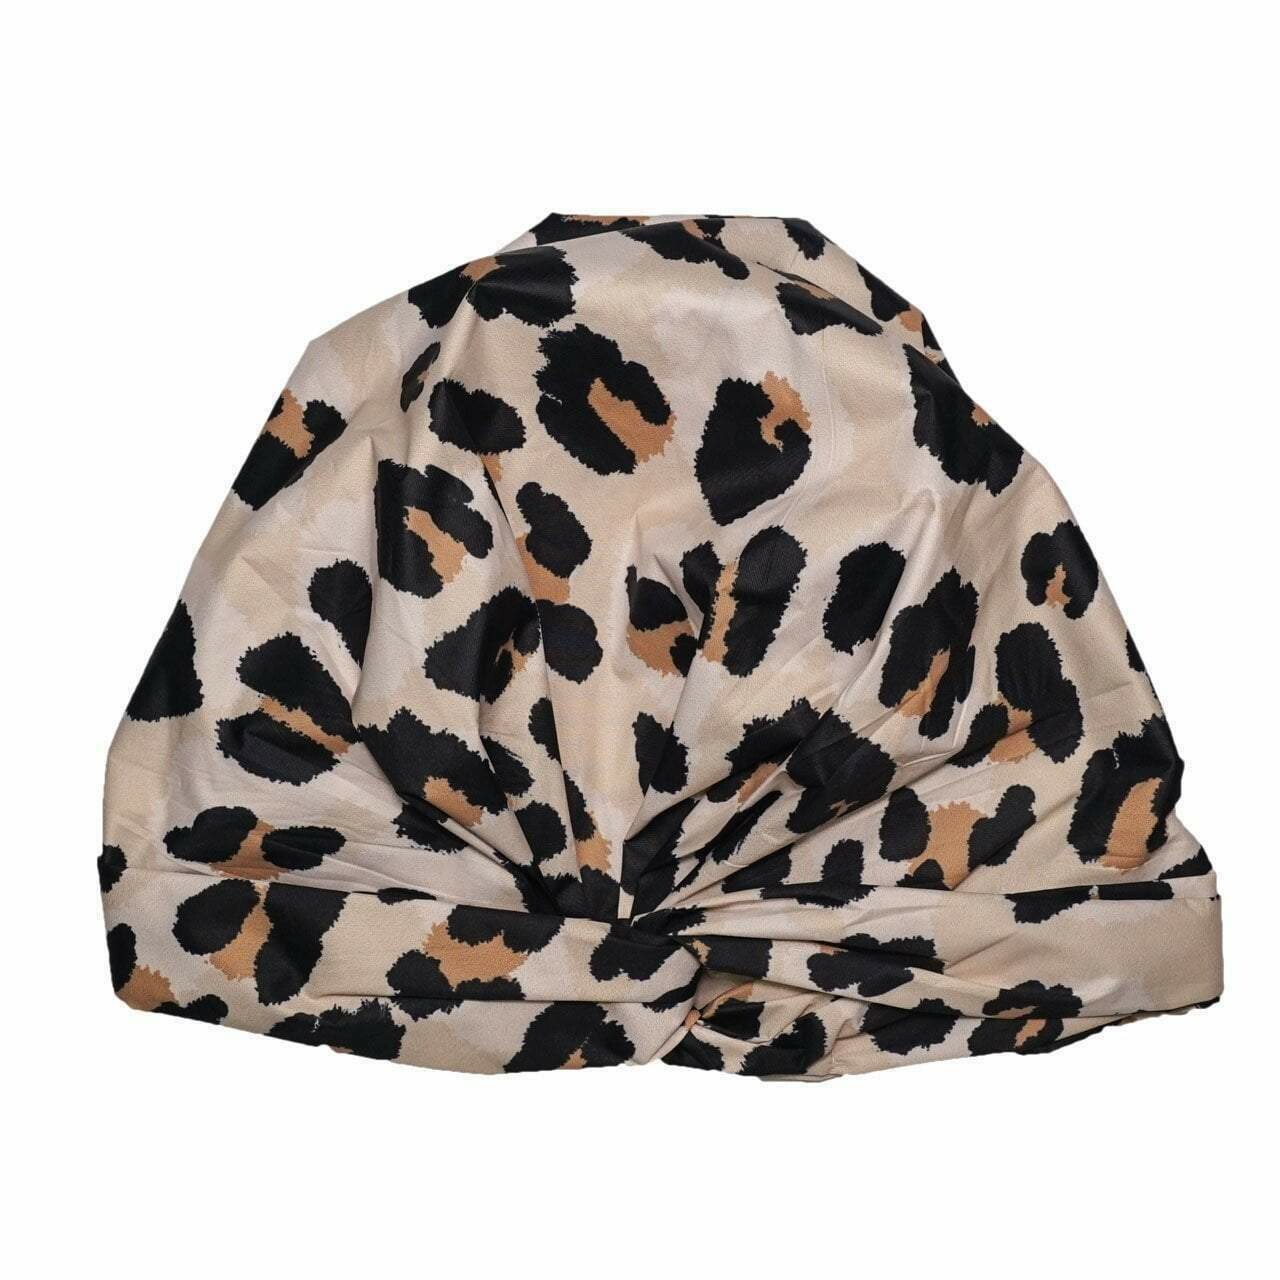 Leopard Shower Cap